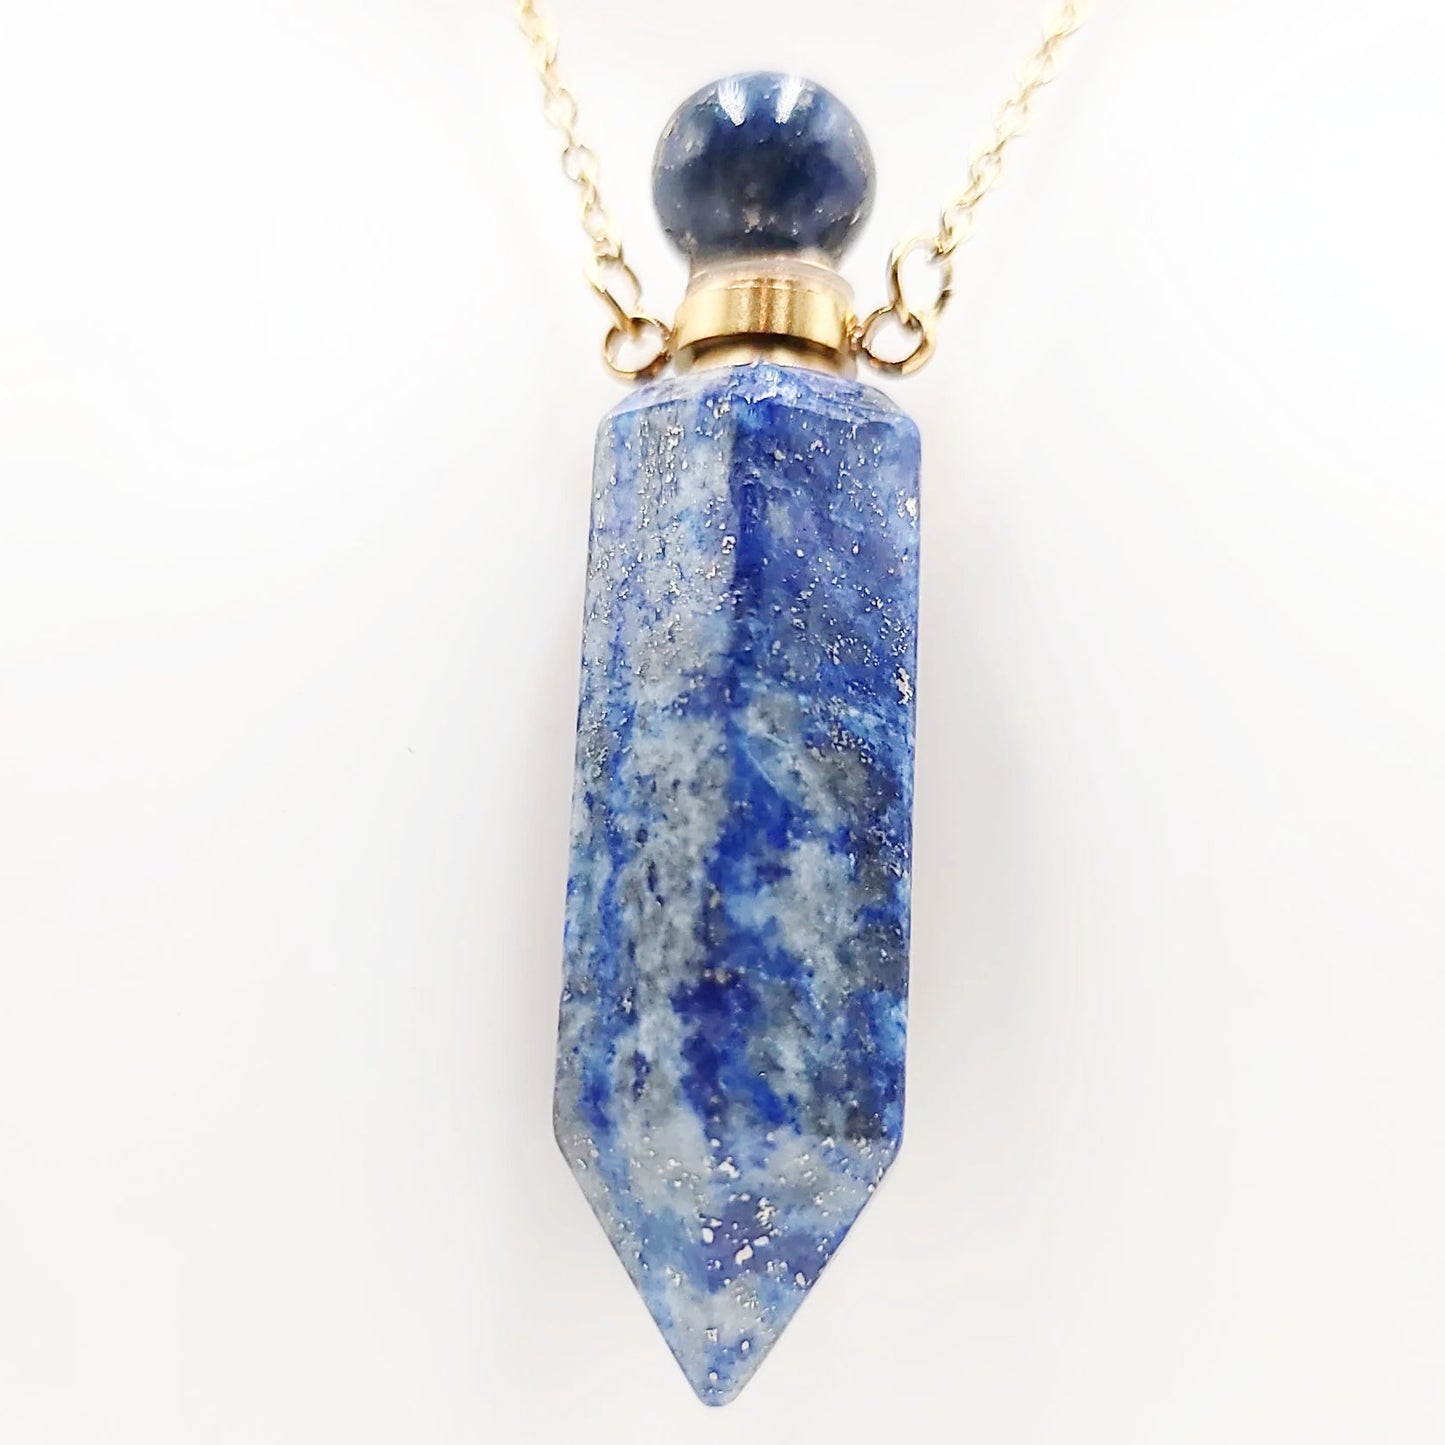 Lapis Lazuli Point Bottle Pendant Necklace Holder Perfume Oils Incense Ashes - Elevated Metaphysical